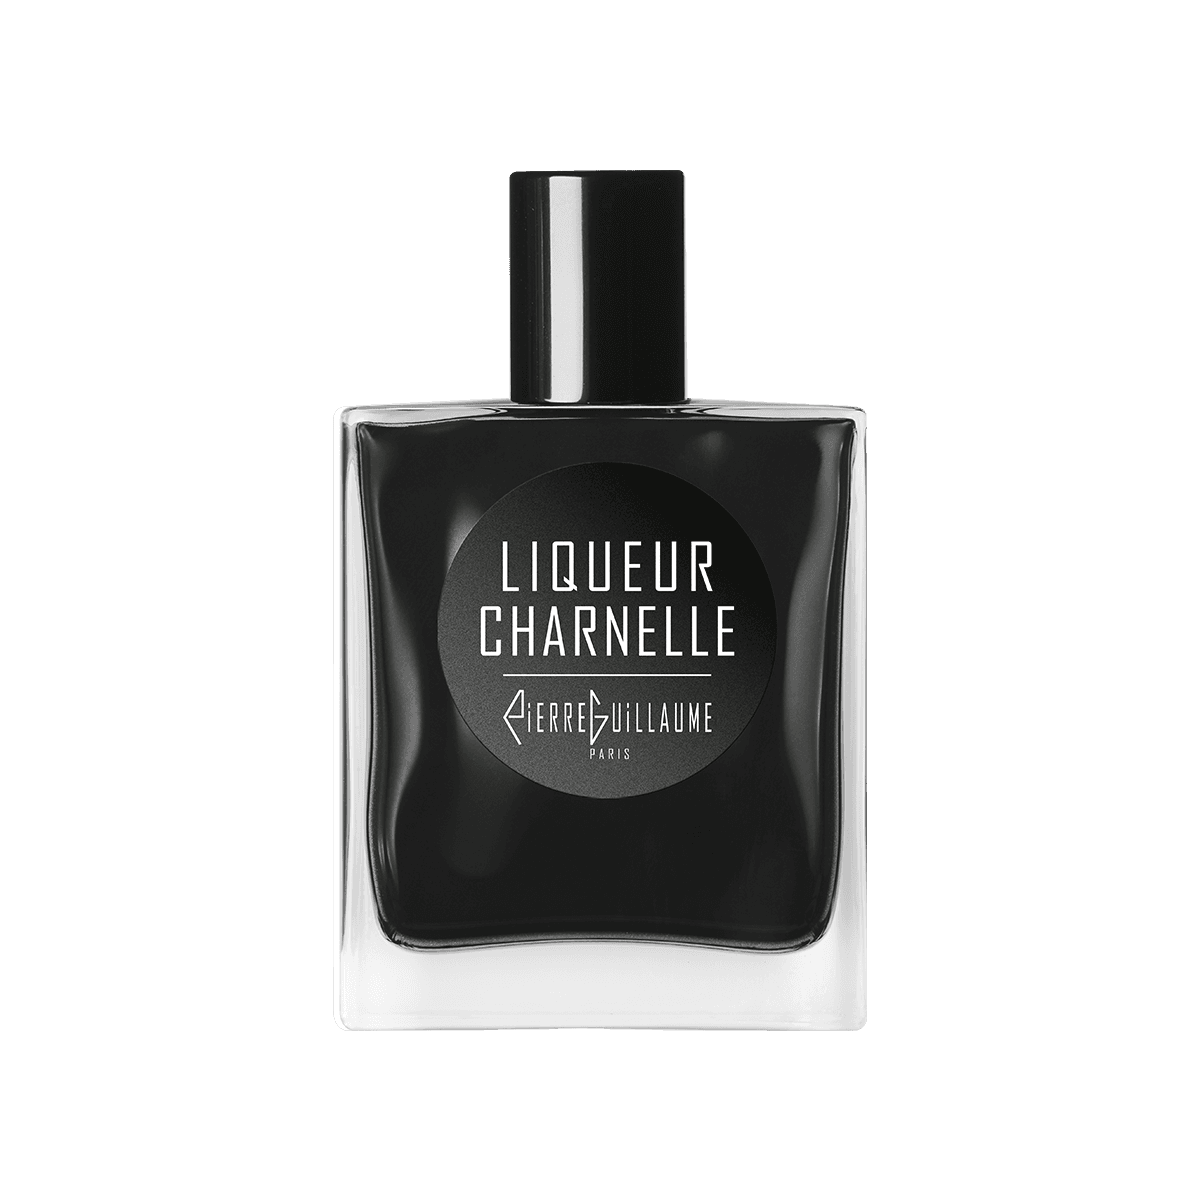 Pierre Guillaume - Liqueur Charnelle 50 ml | Perfume Lounge